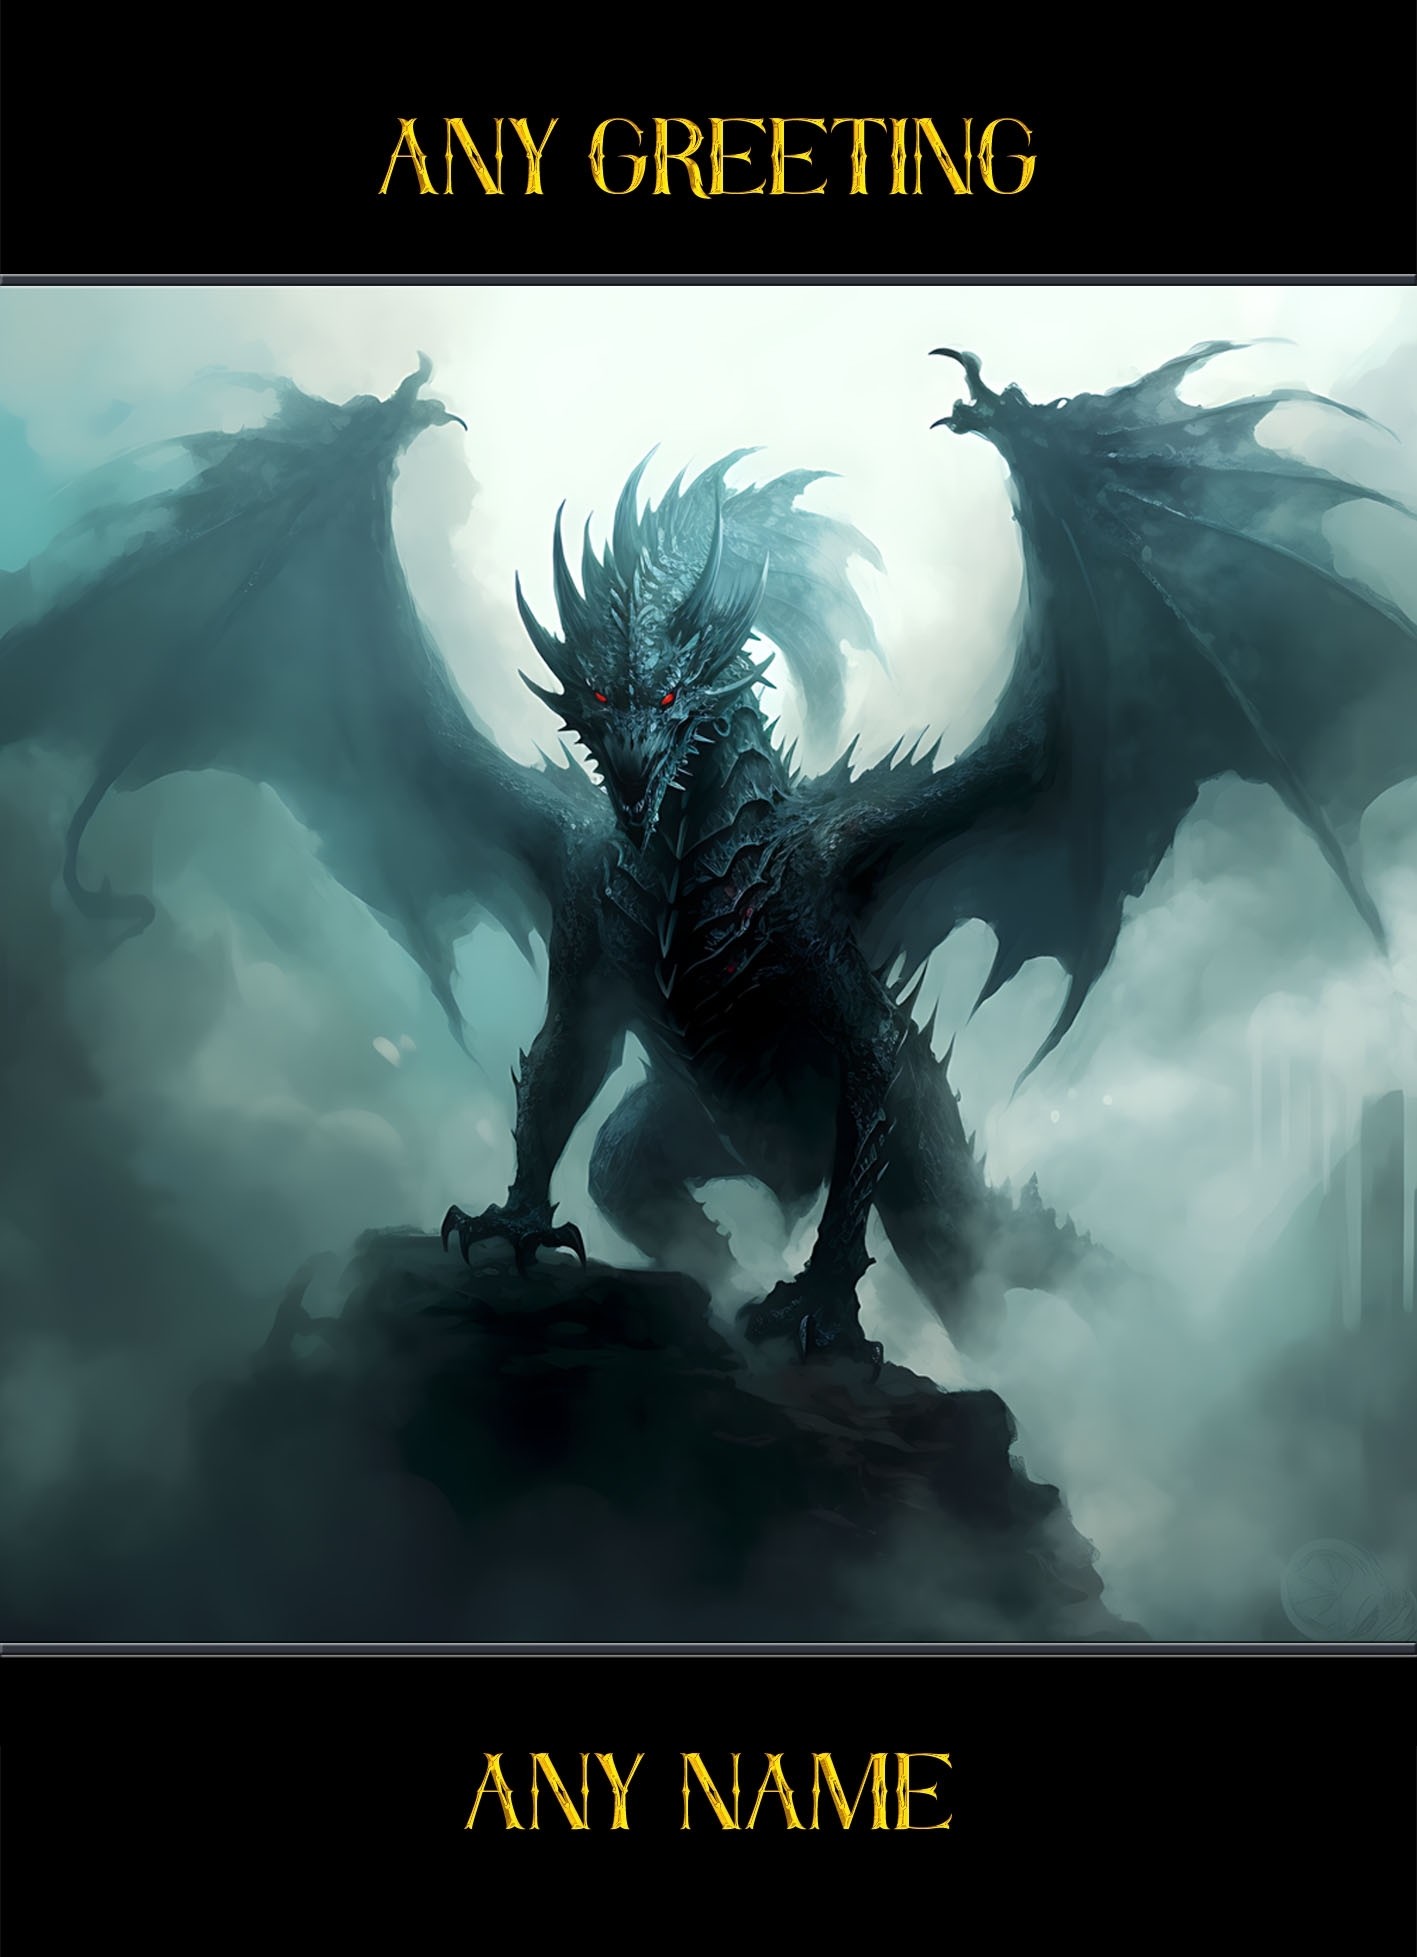 Personalised Fantasy Art Dragon Greeting Card (Design 14)